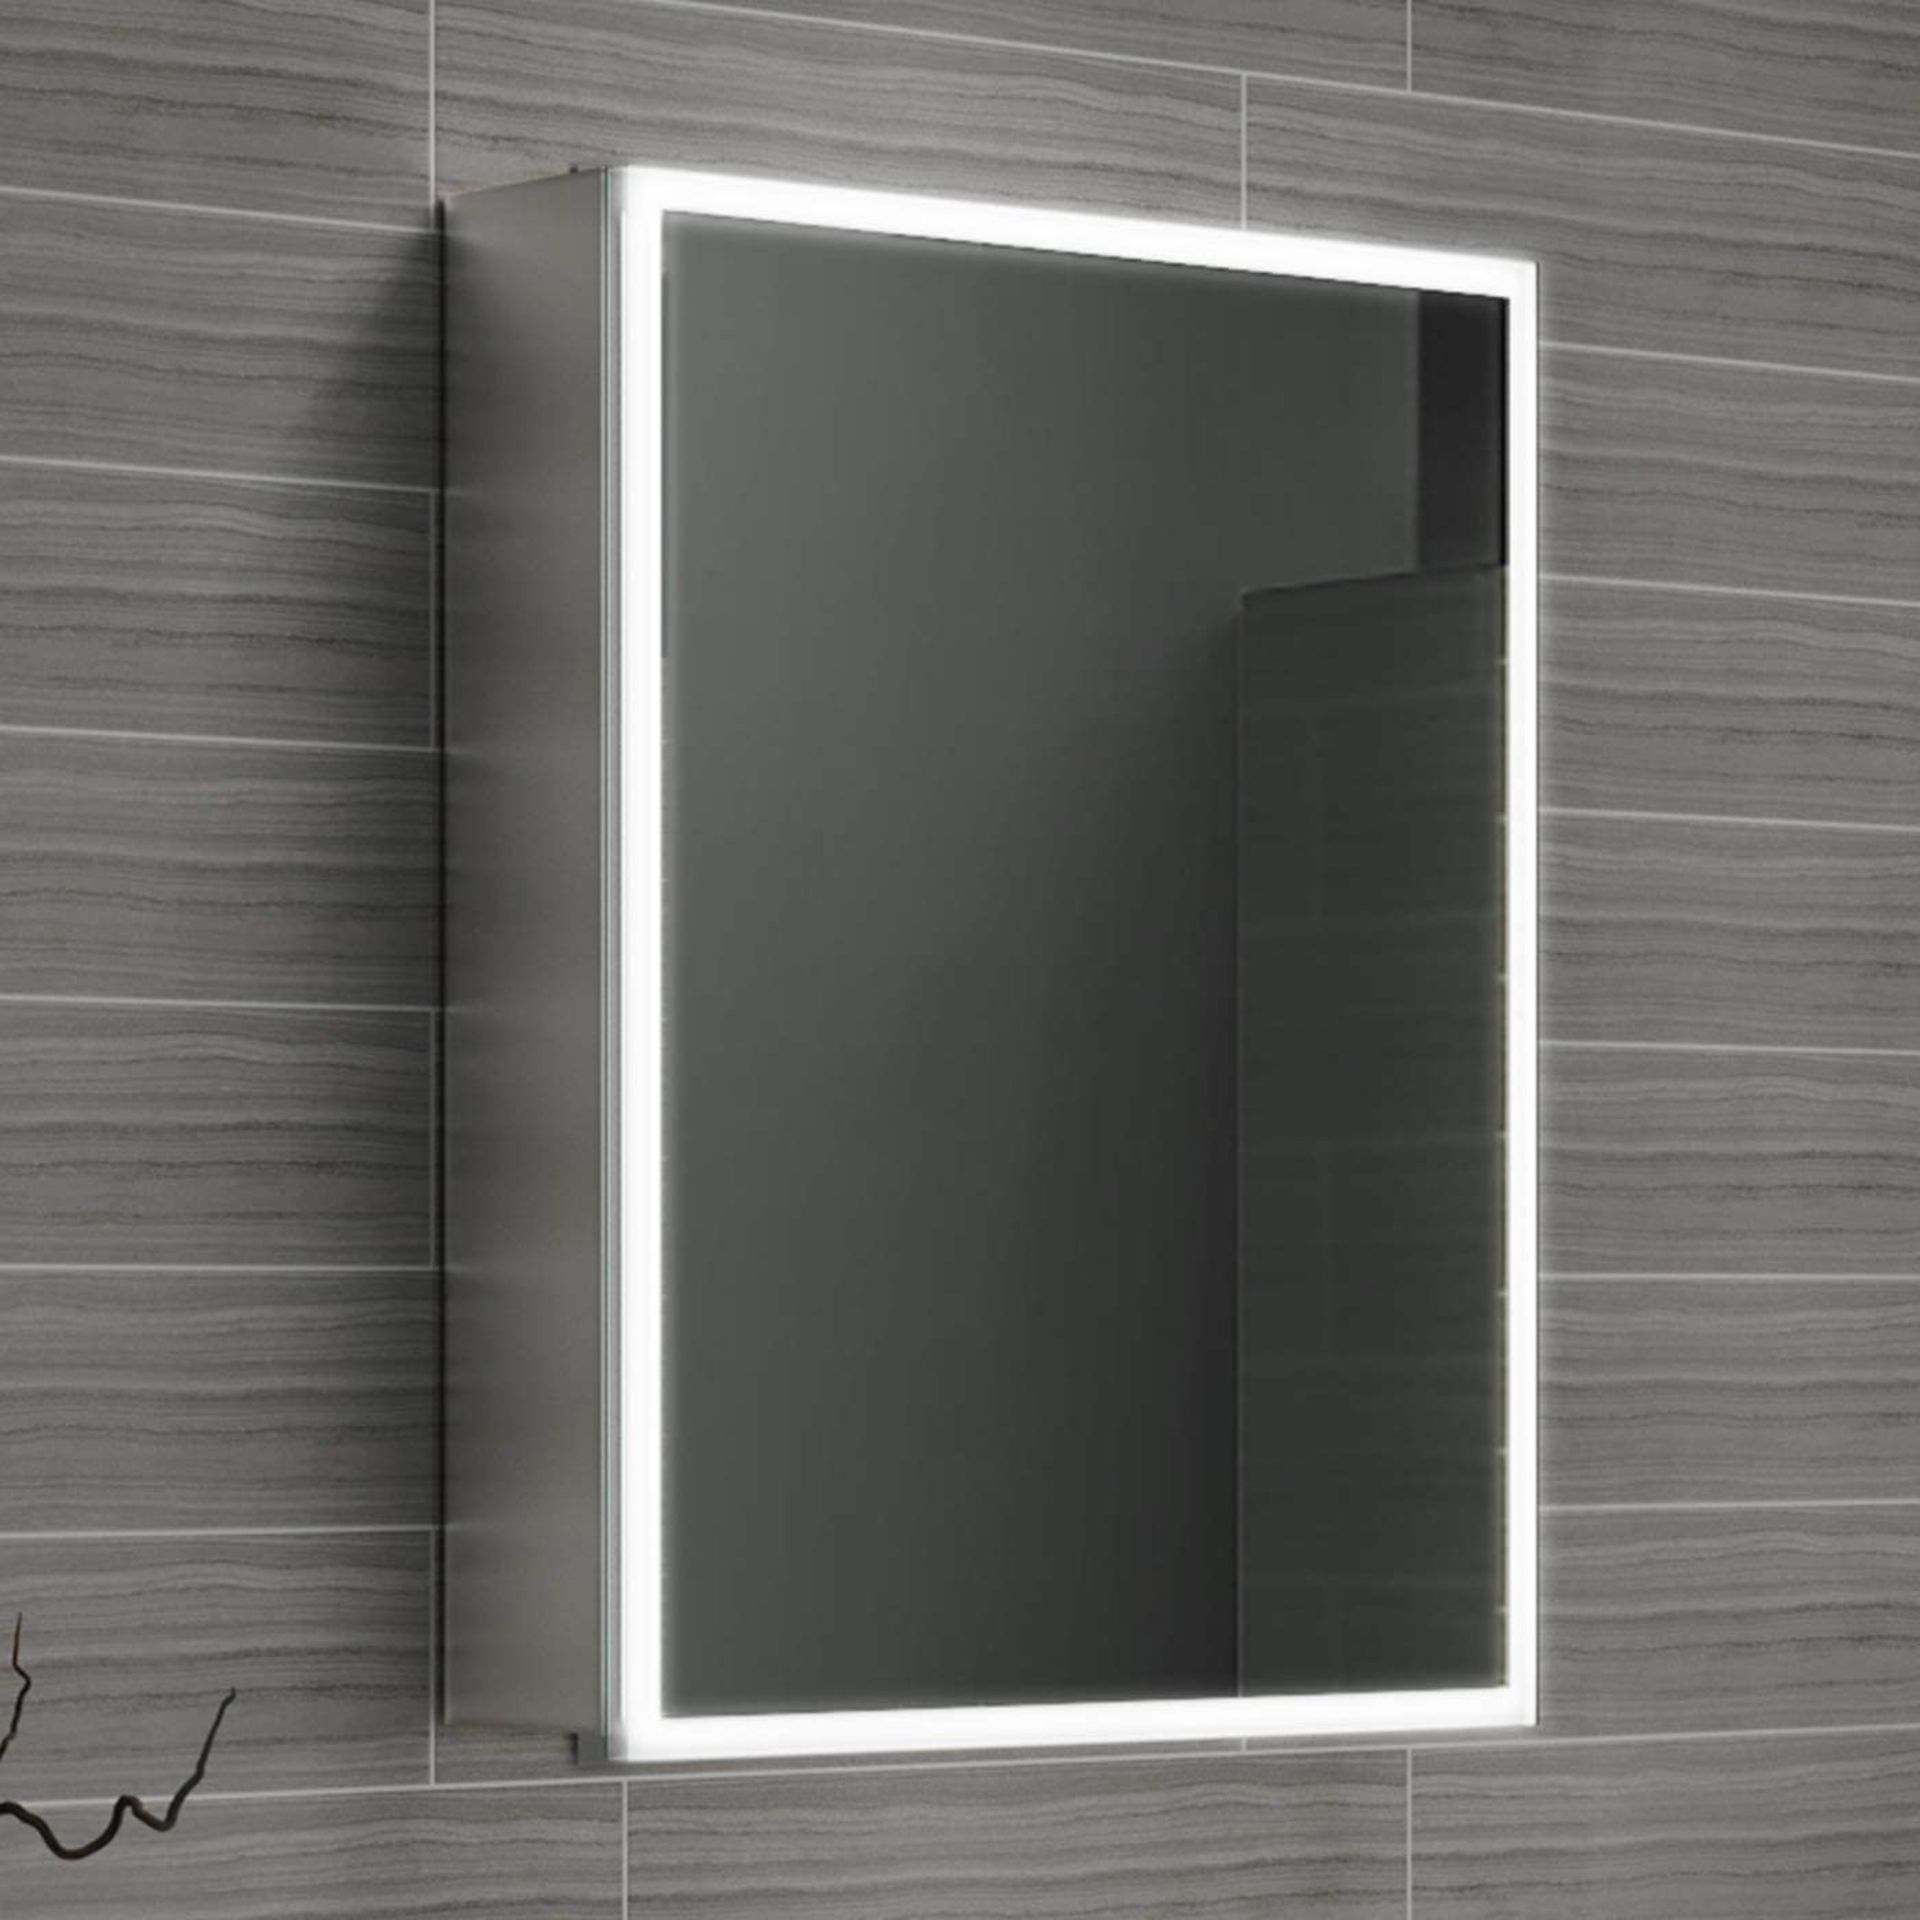 450x600 Cosmic Illuminated LED Mirror Cabinet. RRP £399.99. MC161. We love this mirror cabinet...